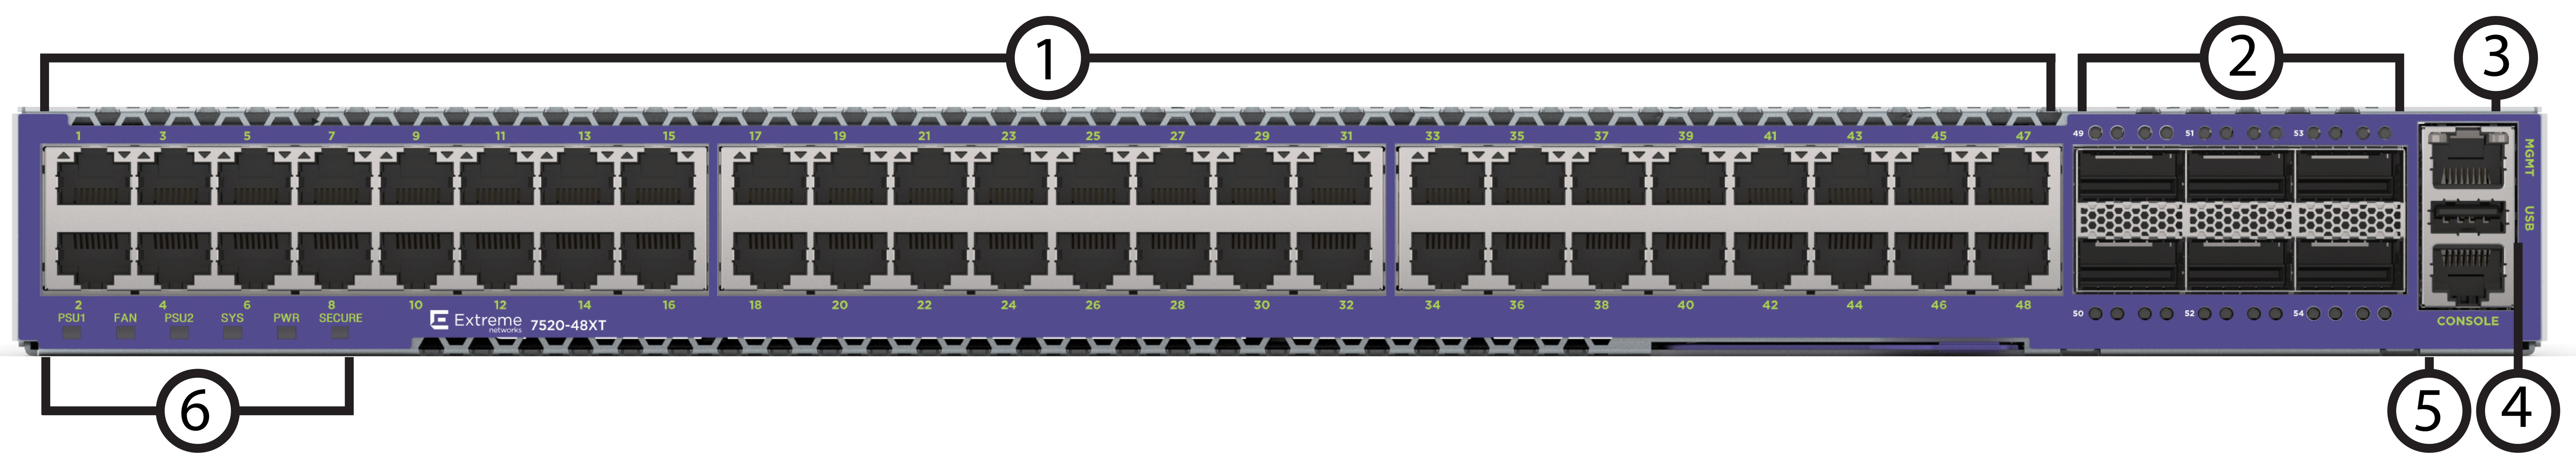 7520-48XT-6C Switch Front Panel